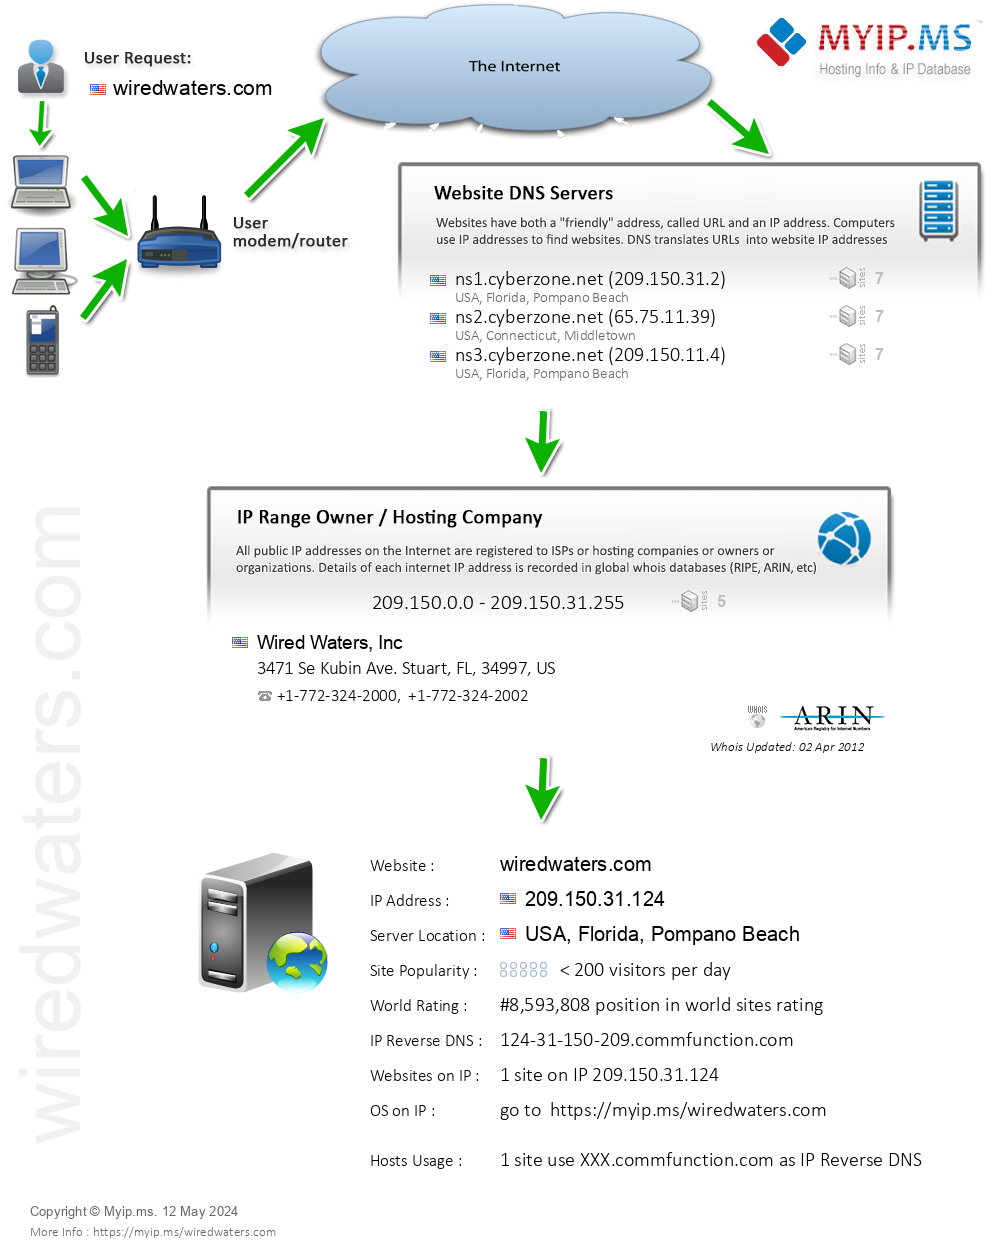 Wiredwaters.com - Website Hosting Visual IP Diagram